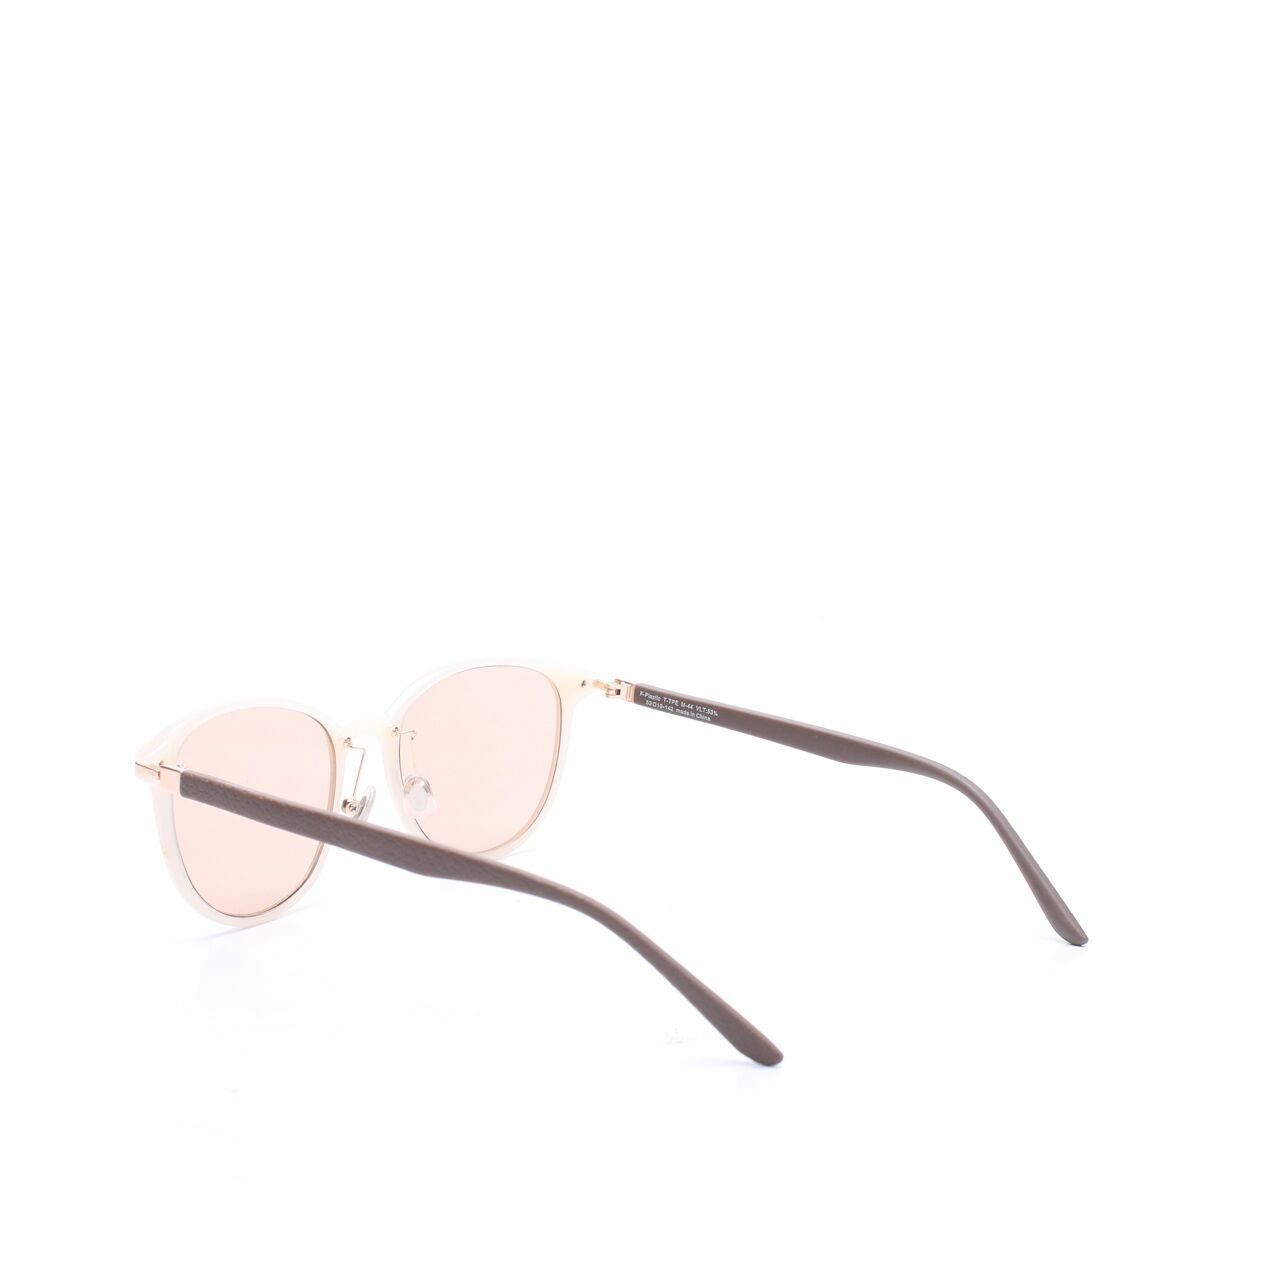 Zoff Brown & White Sunglasses